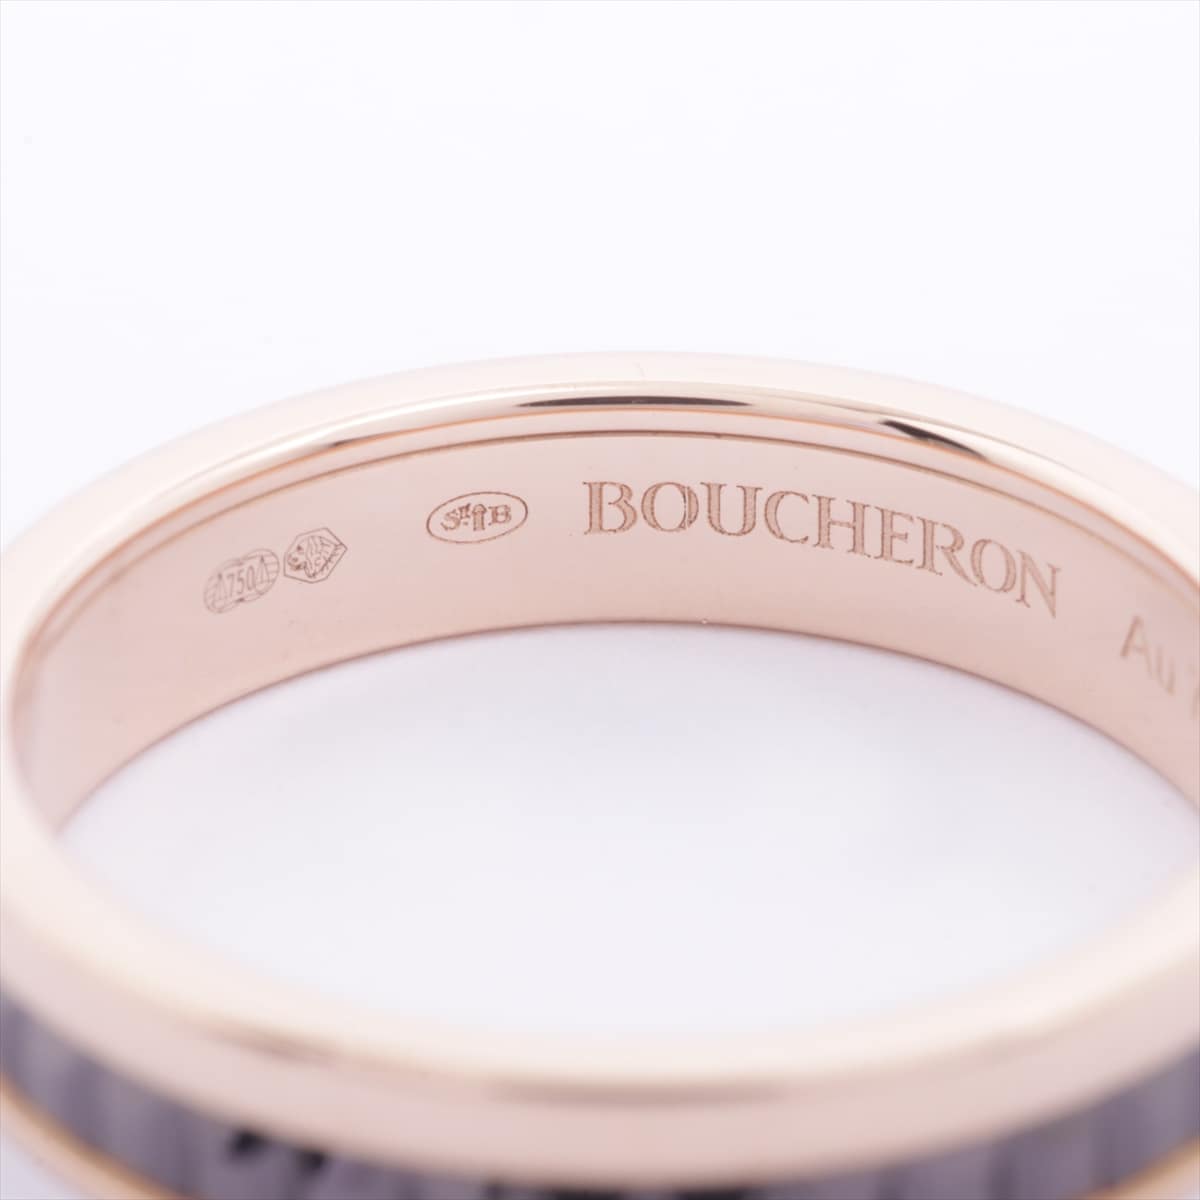 Boucheron Quatre Classic rings 750 PG 4.1g 51